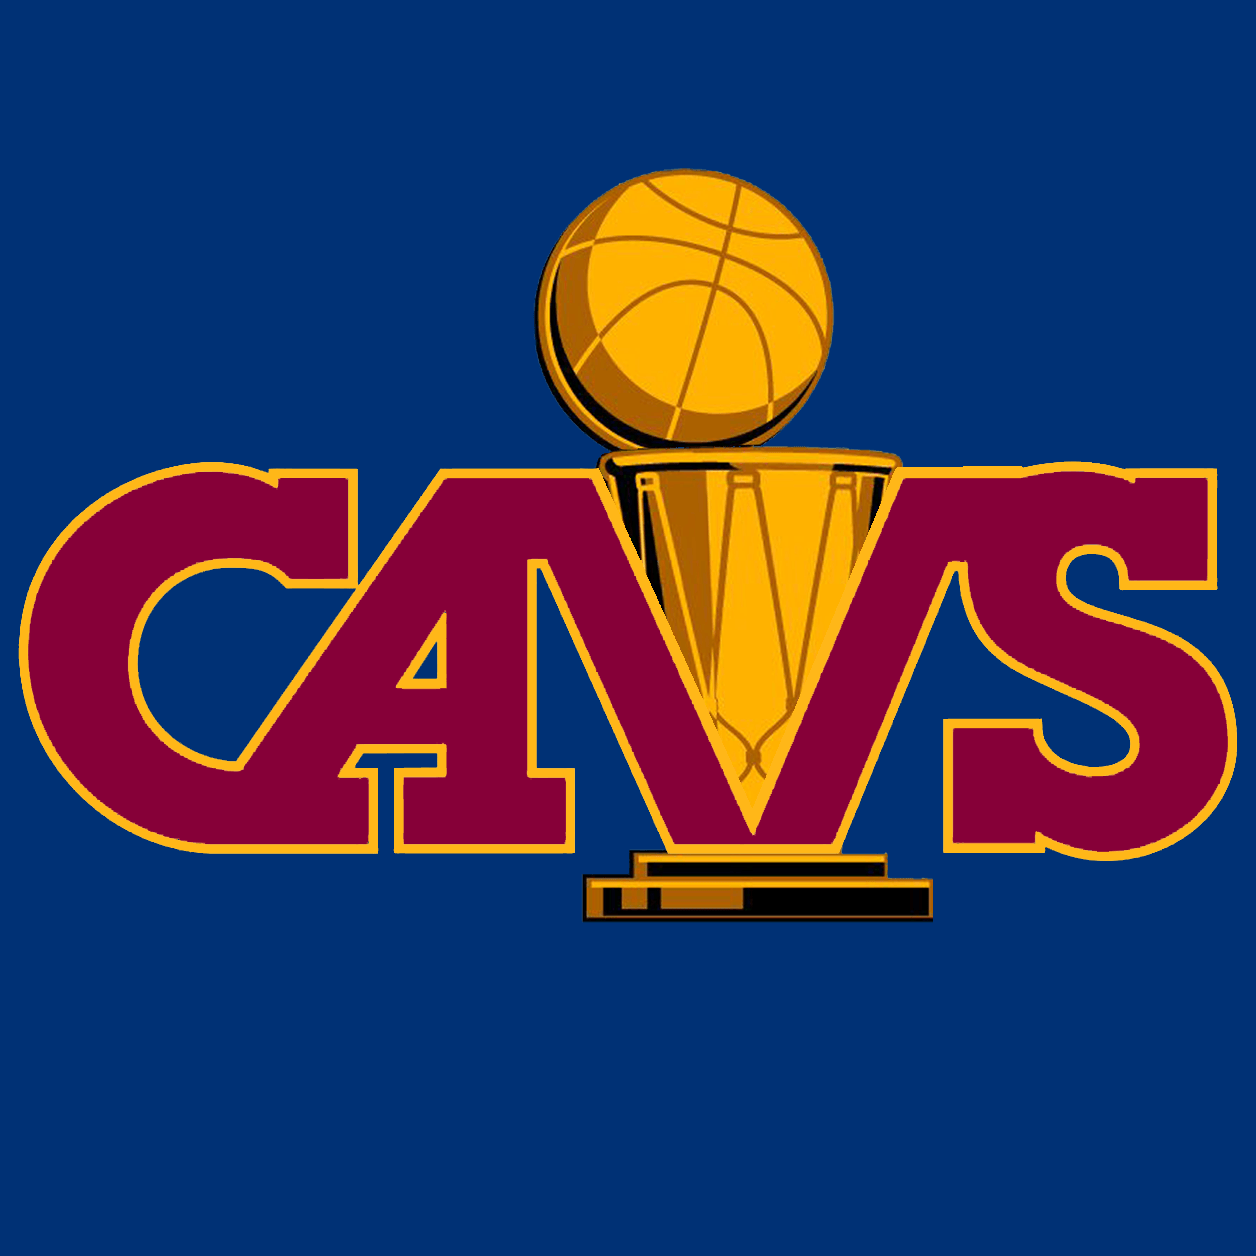 Cavs Logo - Present Cavs Colors School Cavs Logo with the Championship